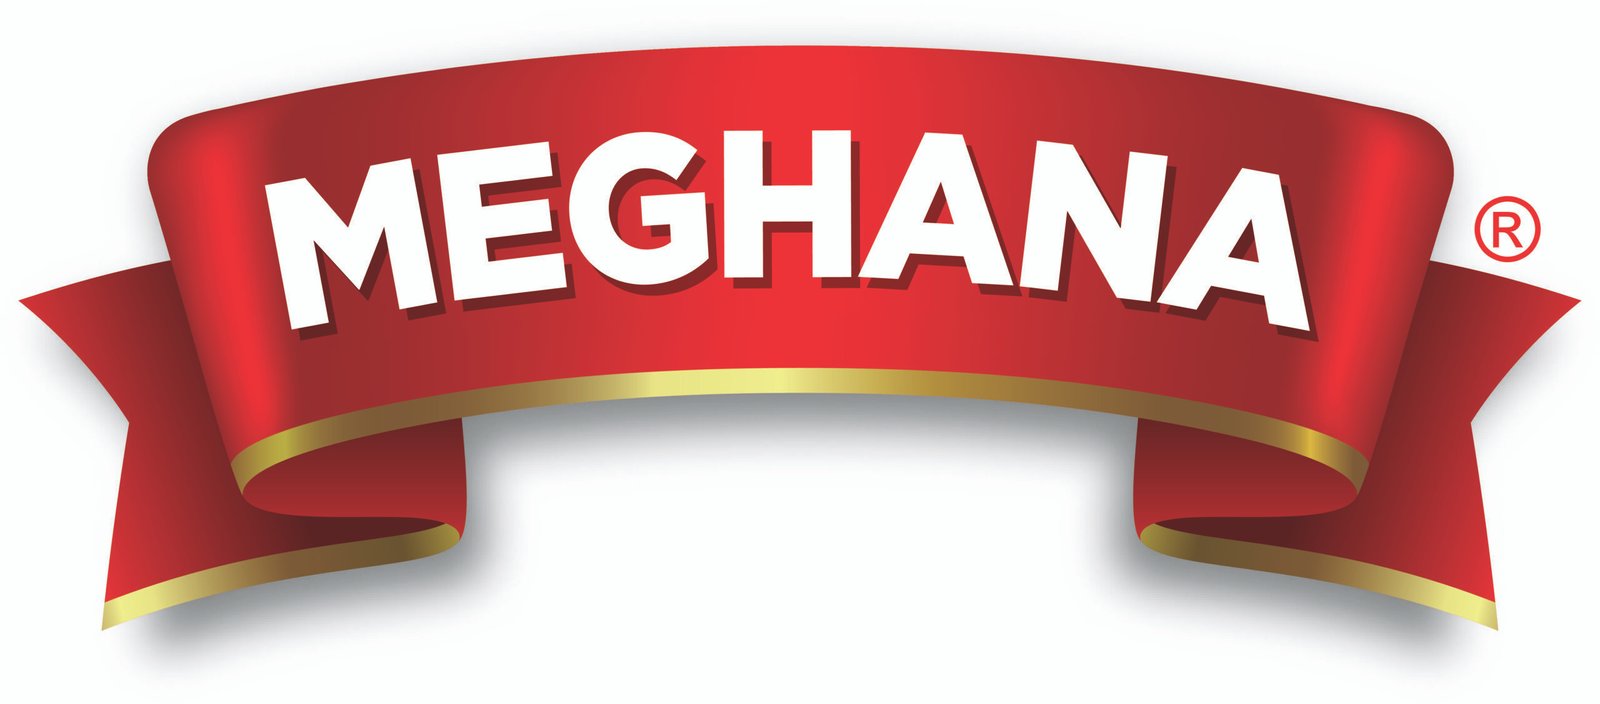 Meghana: Top Pan Masala Distributor in India's Market